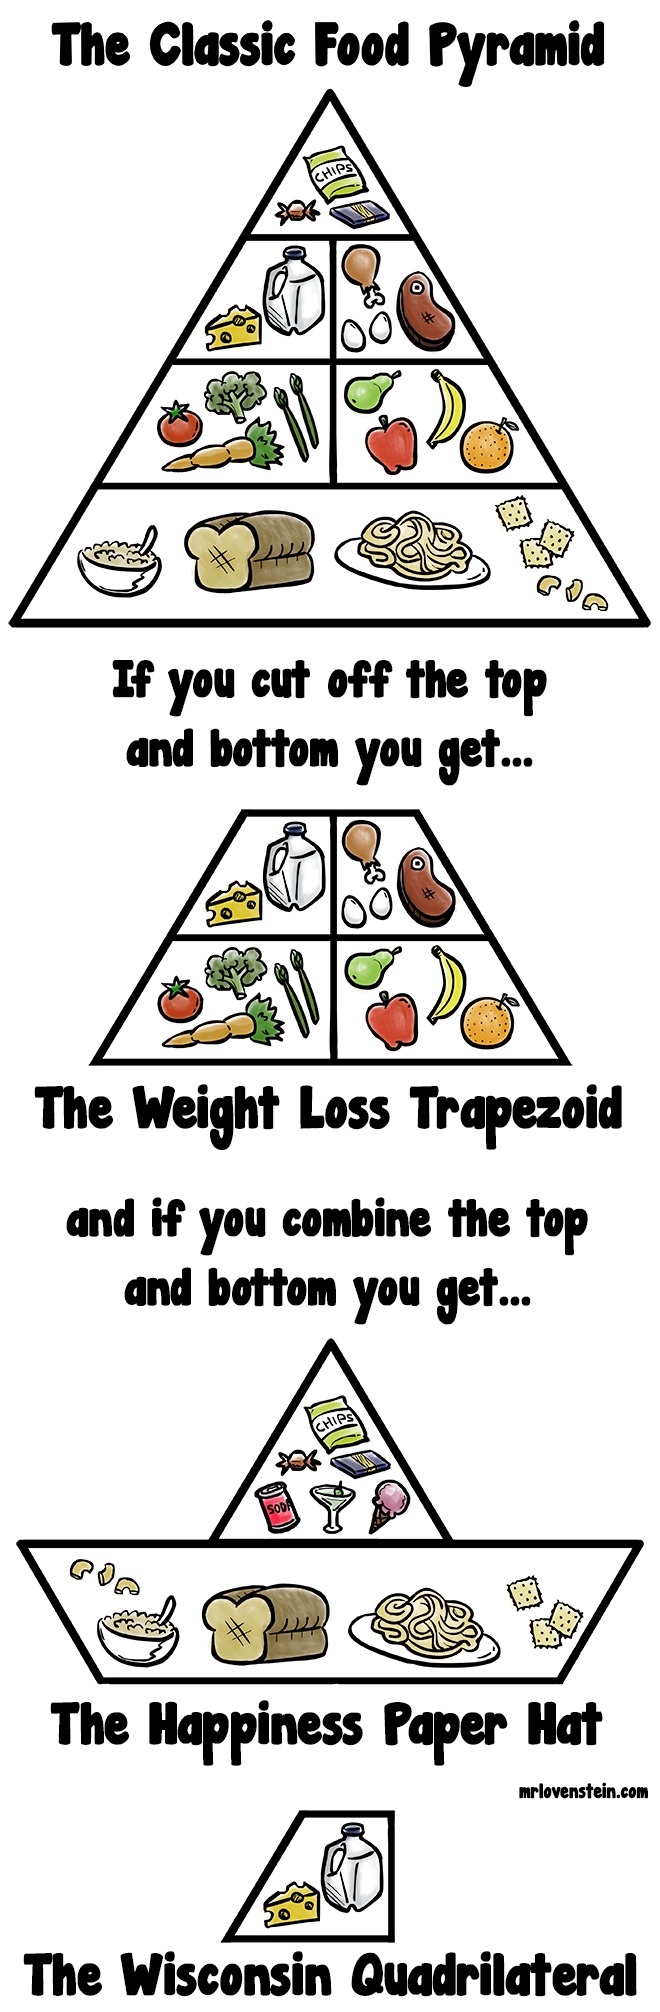 The Classic Food Pyramid